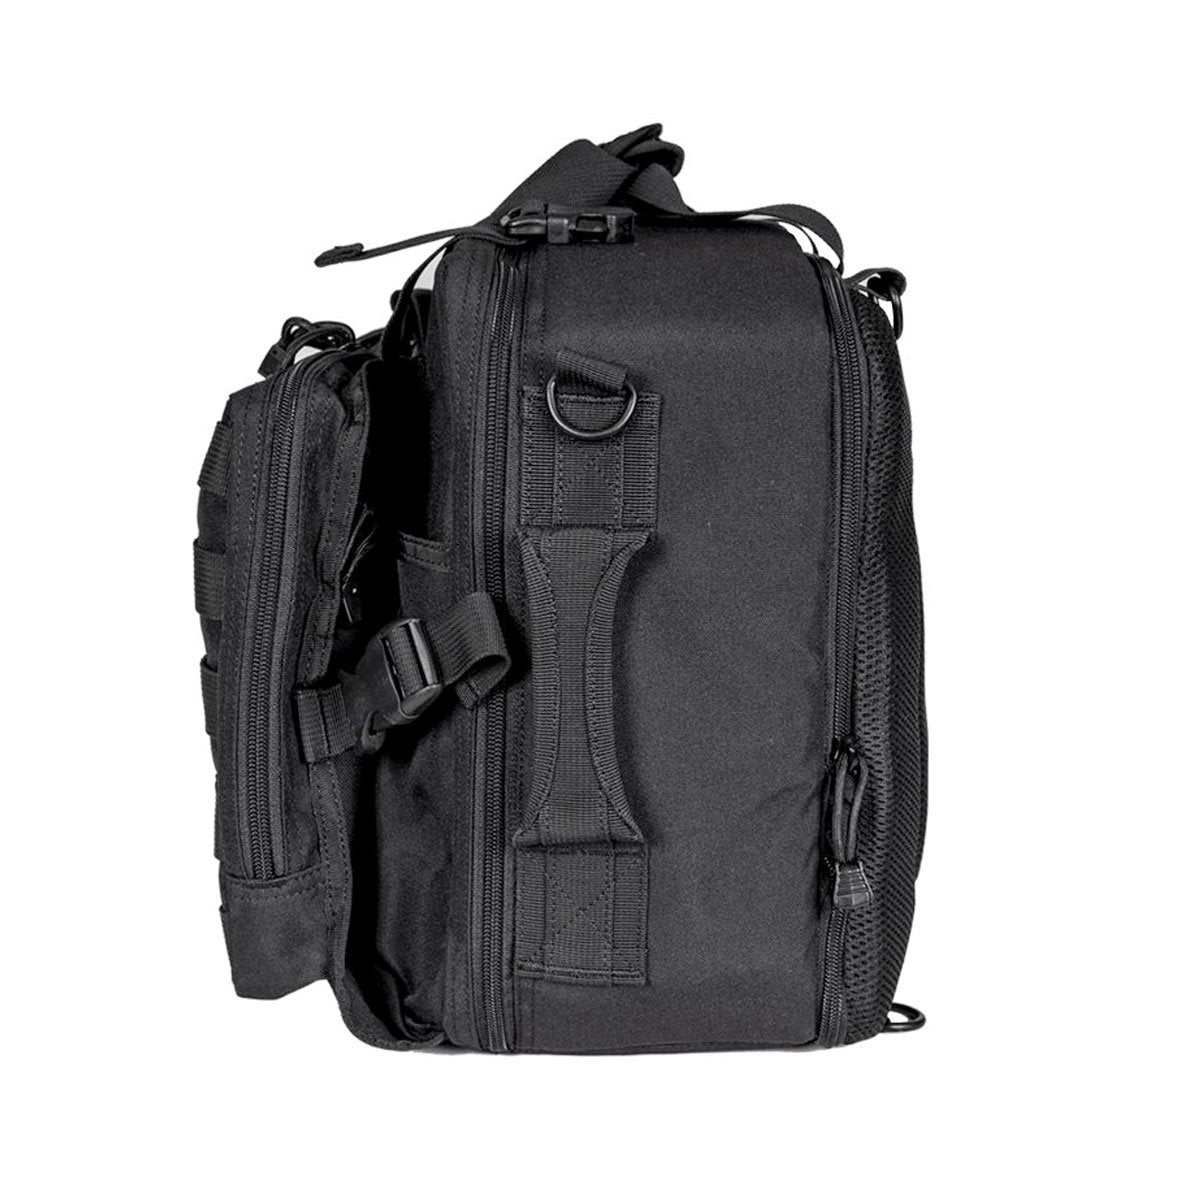 221B Tactical Hondo Patrol Duty Gear Bag 2.0